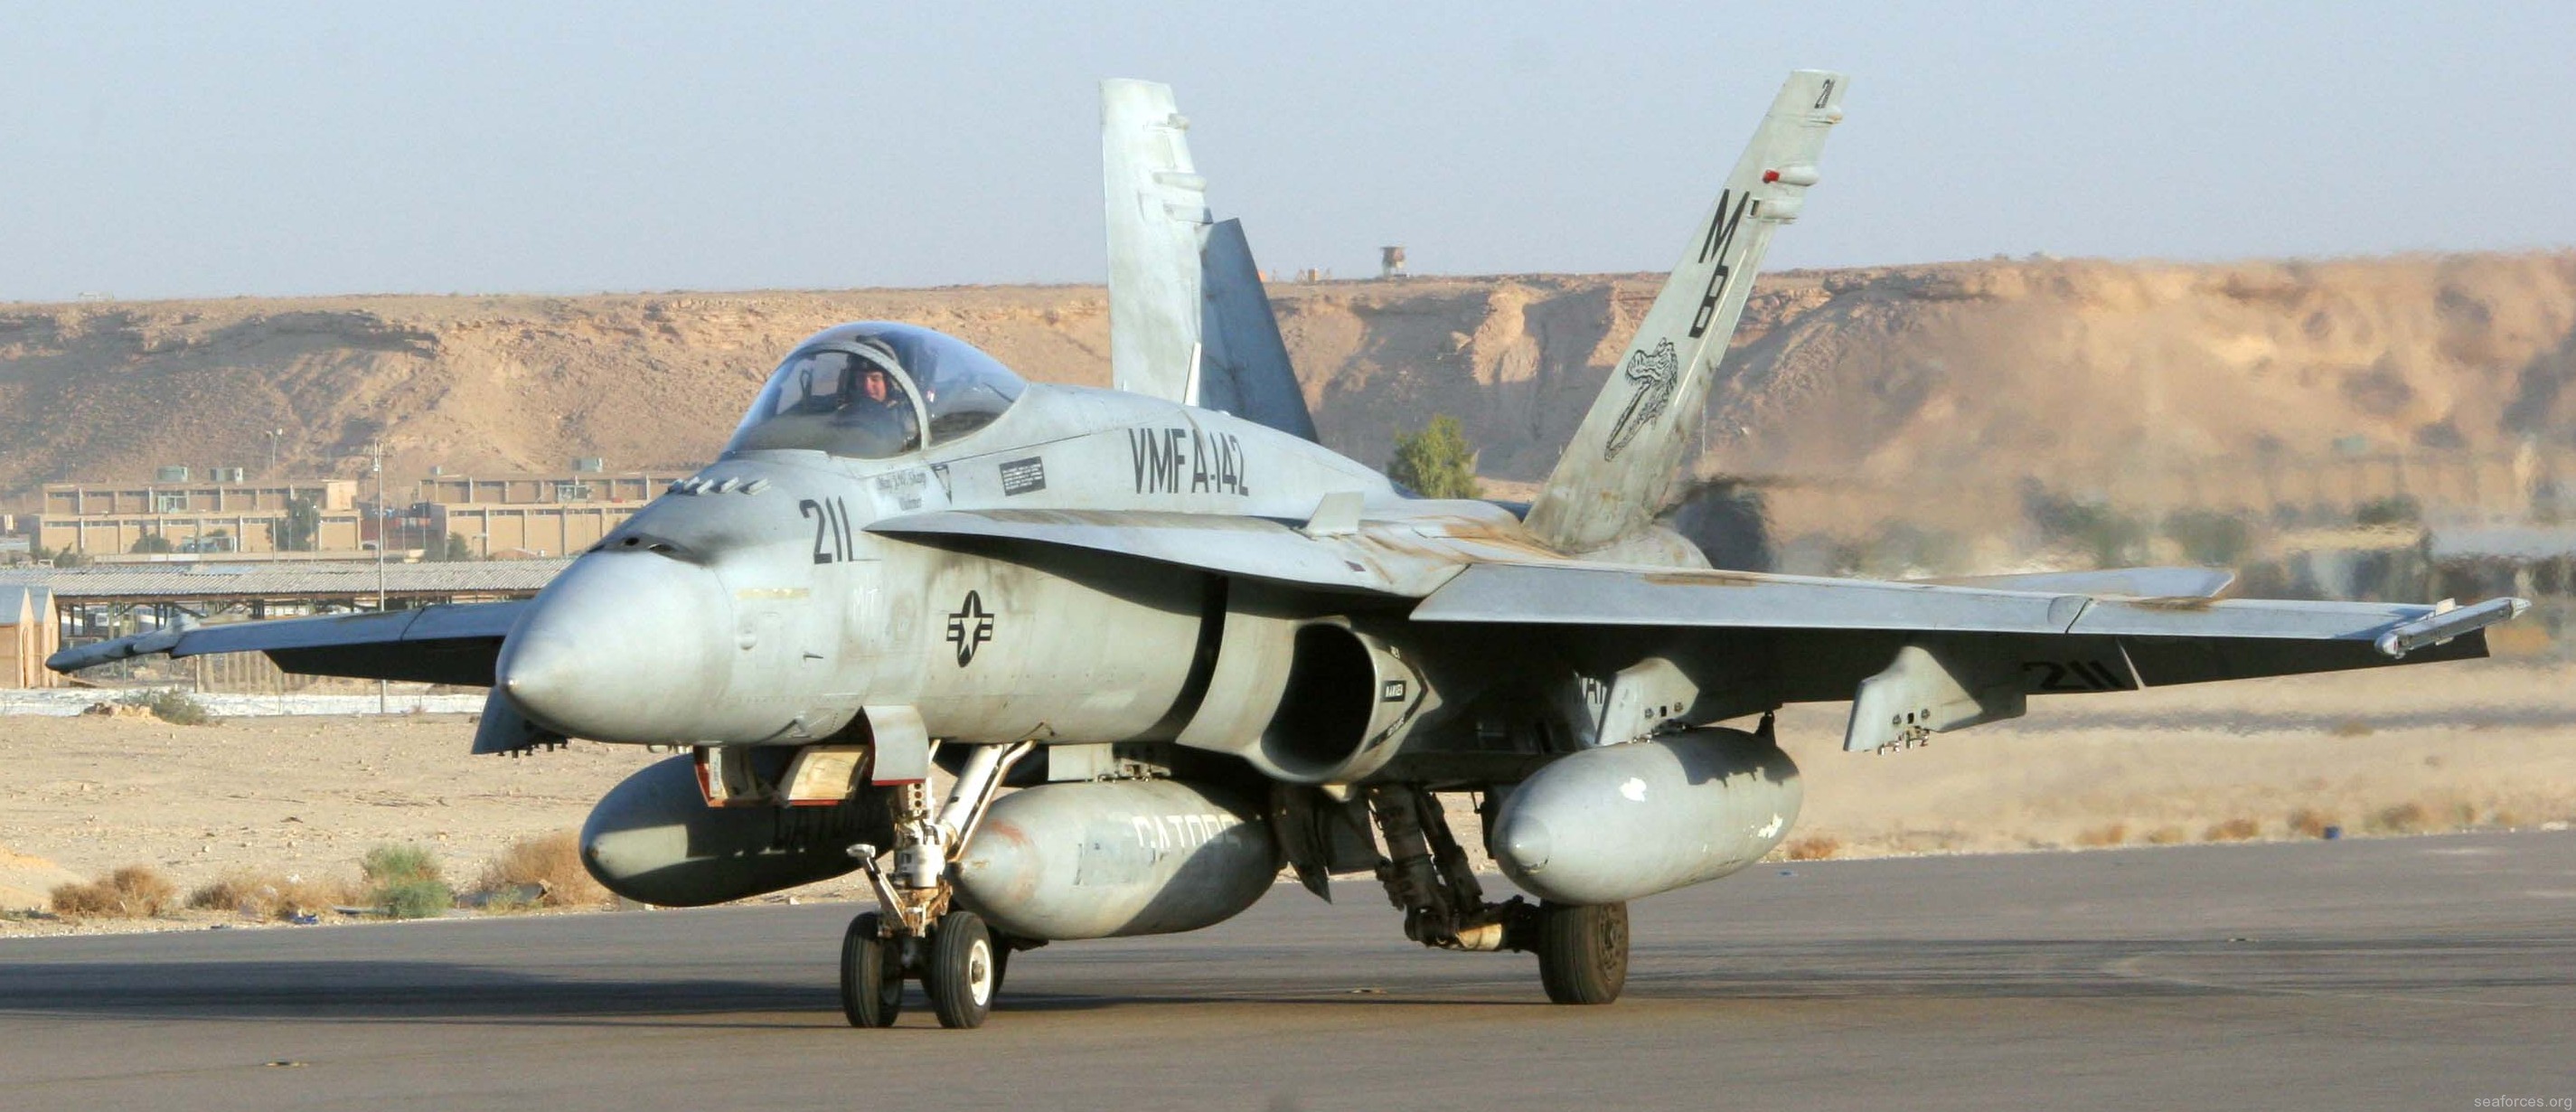 vmfa-142 flying gators marine fighter attack squadron usmc f/a-18 hornet 03 al asad airbase iraq